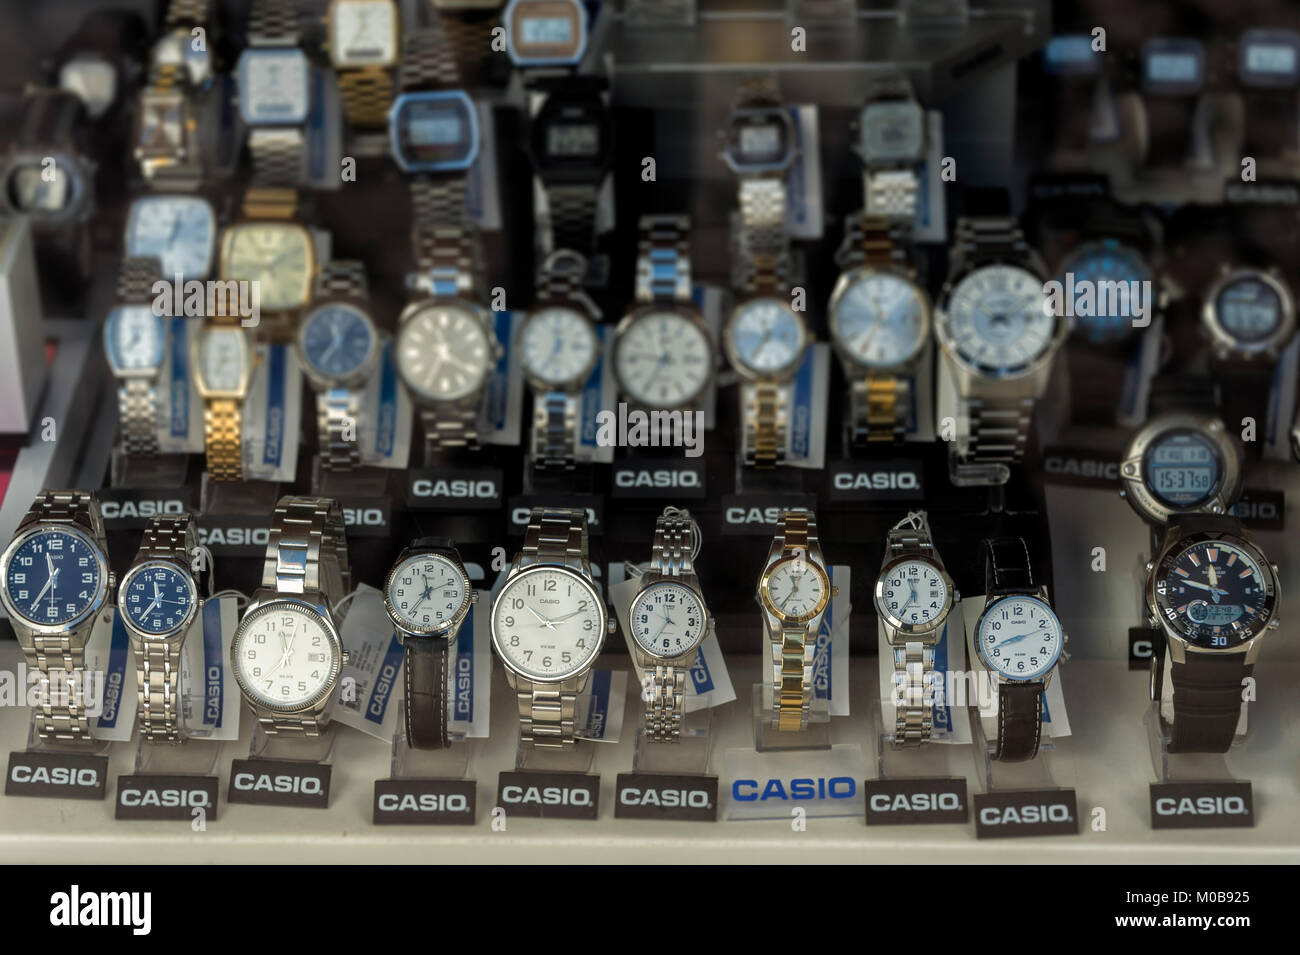 jewellers window display of Casio watches Stock Photo - Alamy